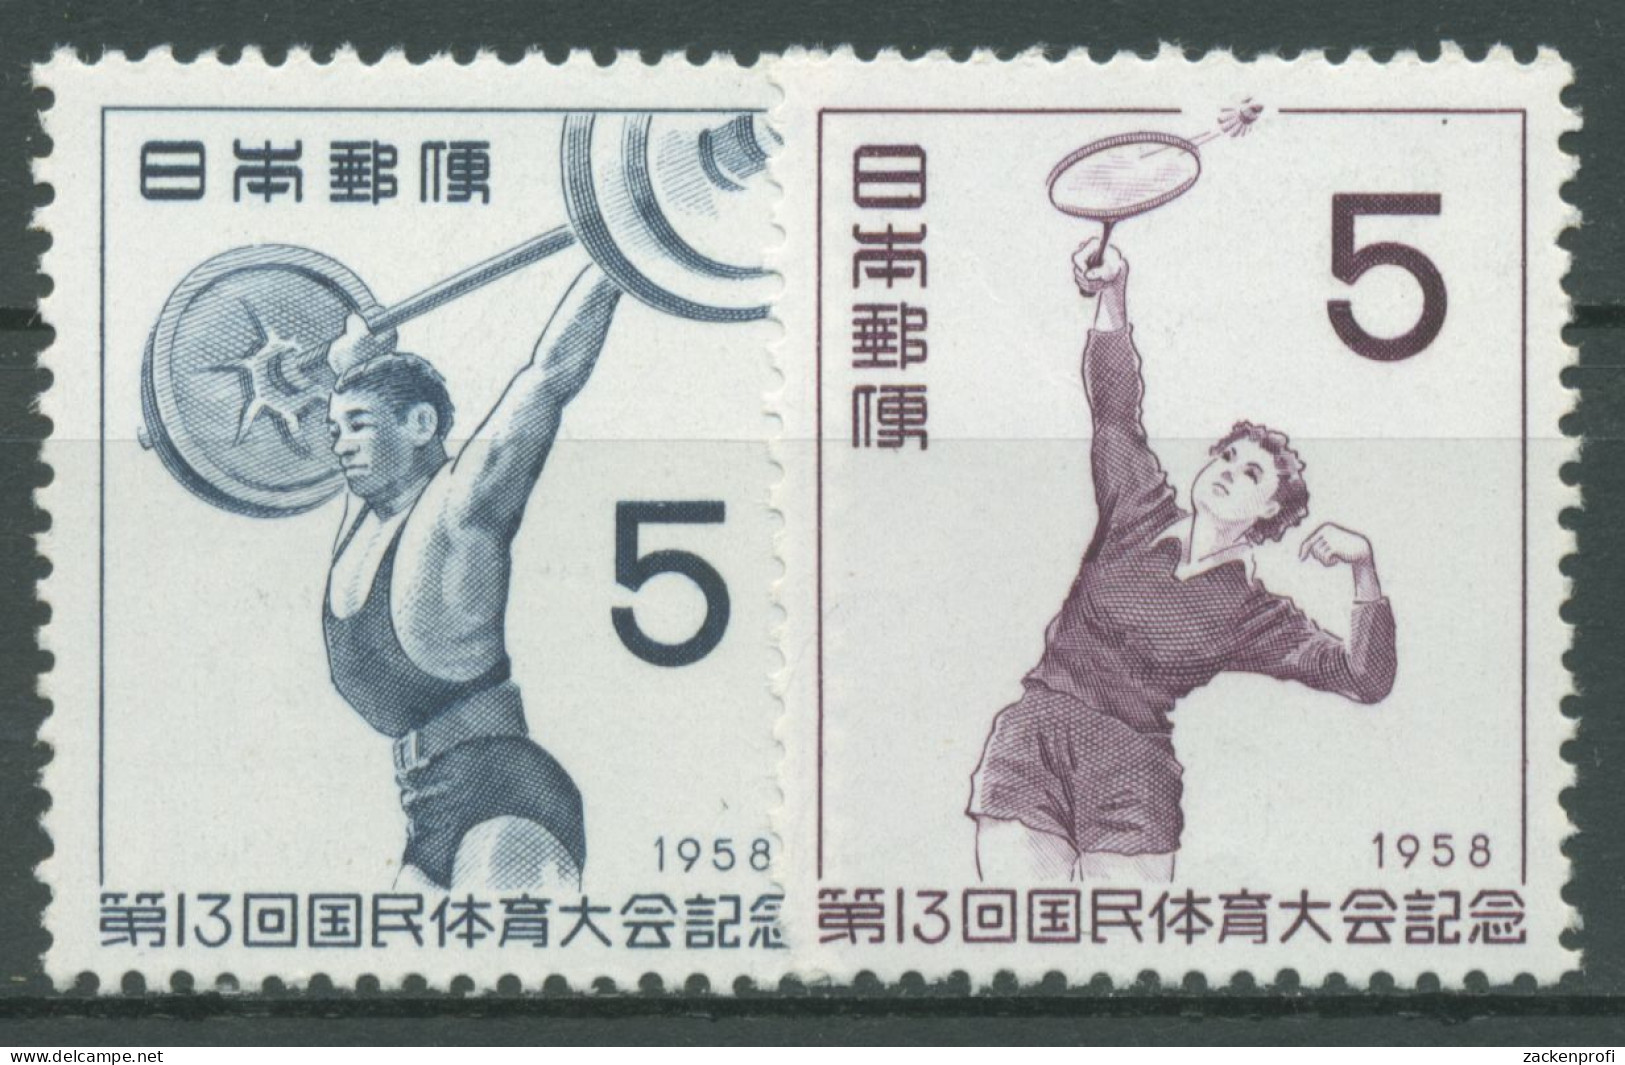 Japan 1958 Nationales Sportfest 689/90 Postfrisch - Unused Stamps